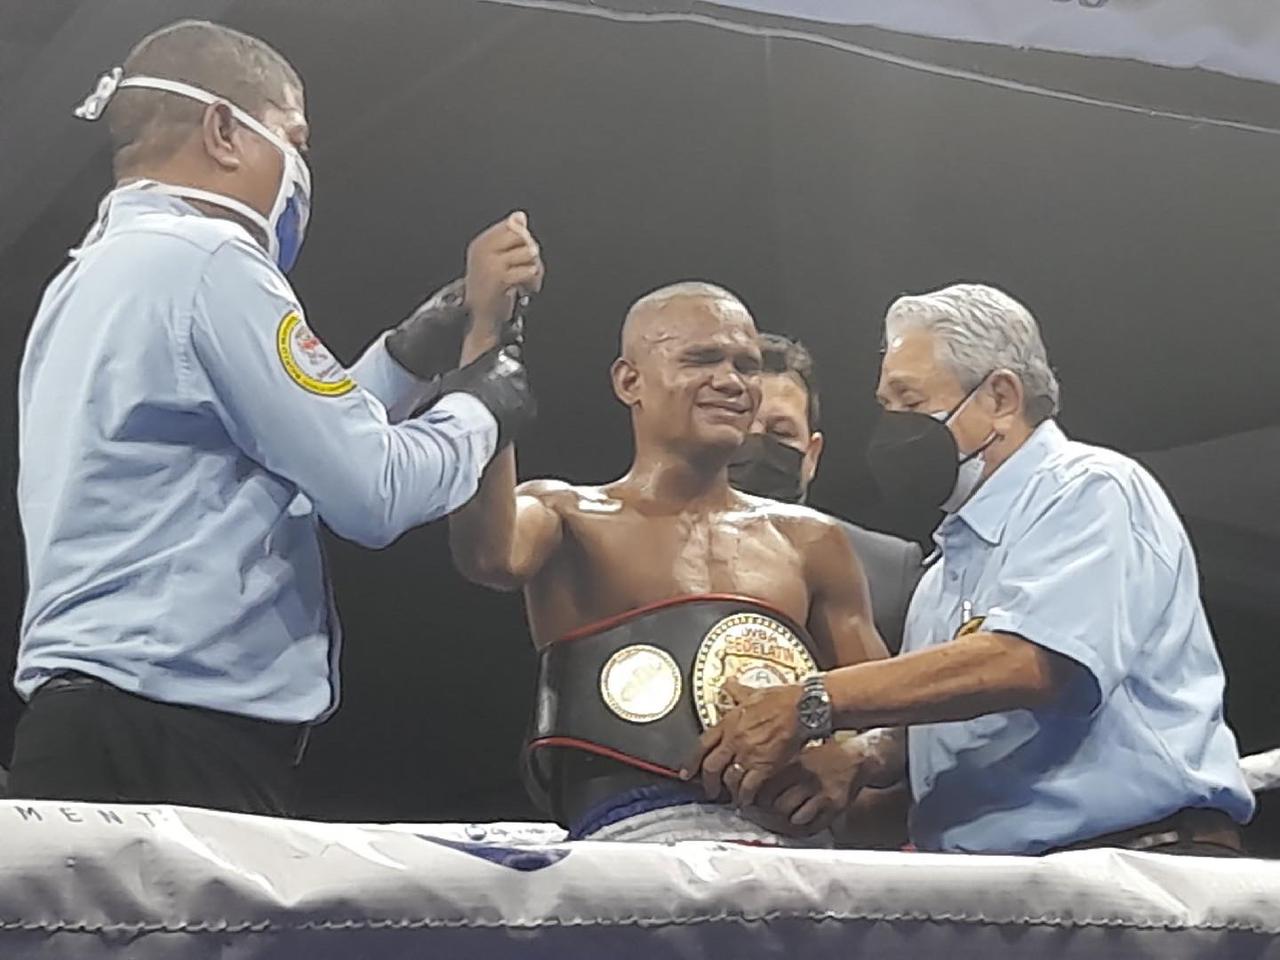 Fernandez defends his WBA-Fedelatin belt against Macario on Saturday 